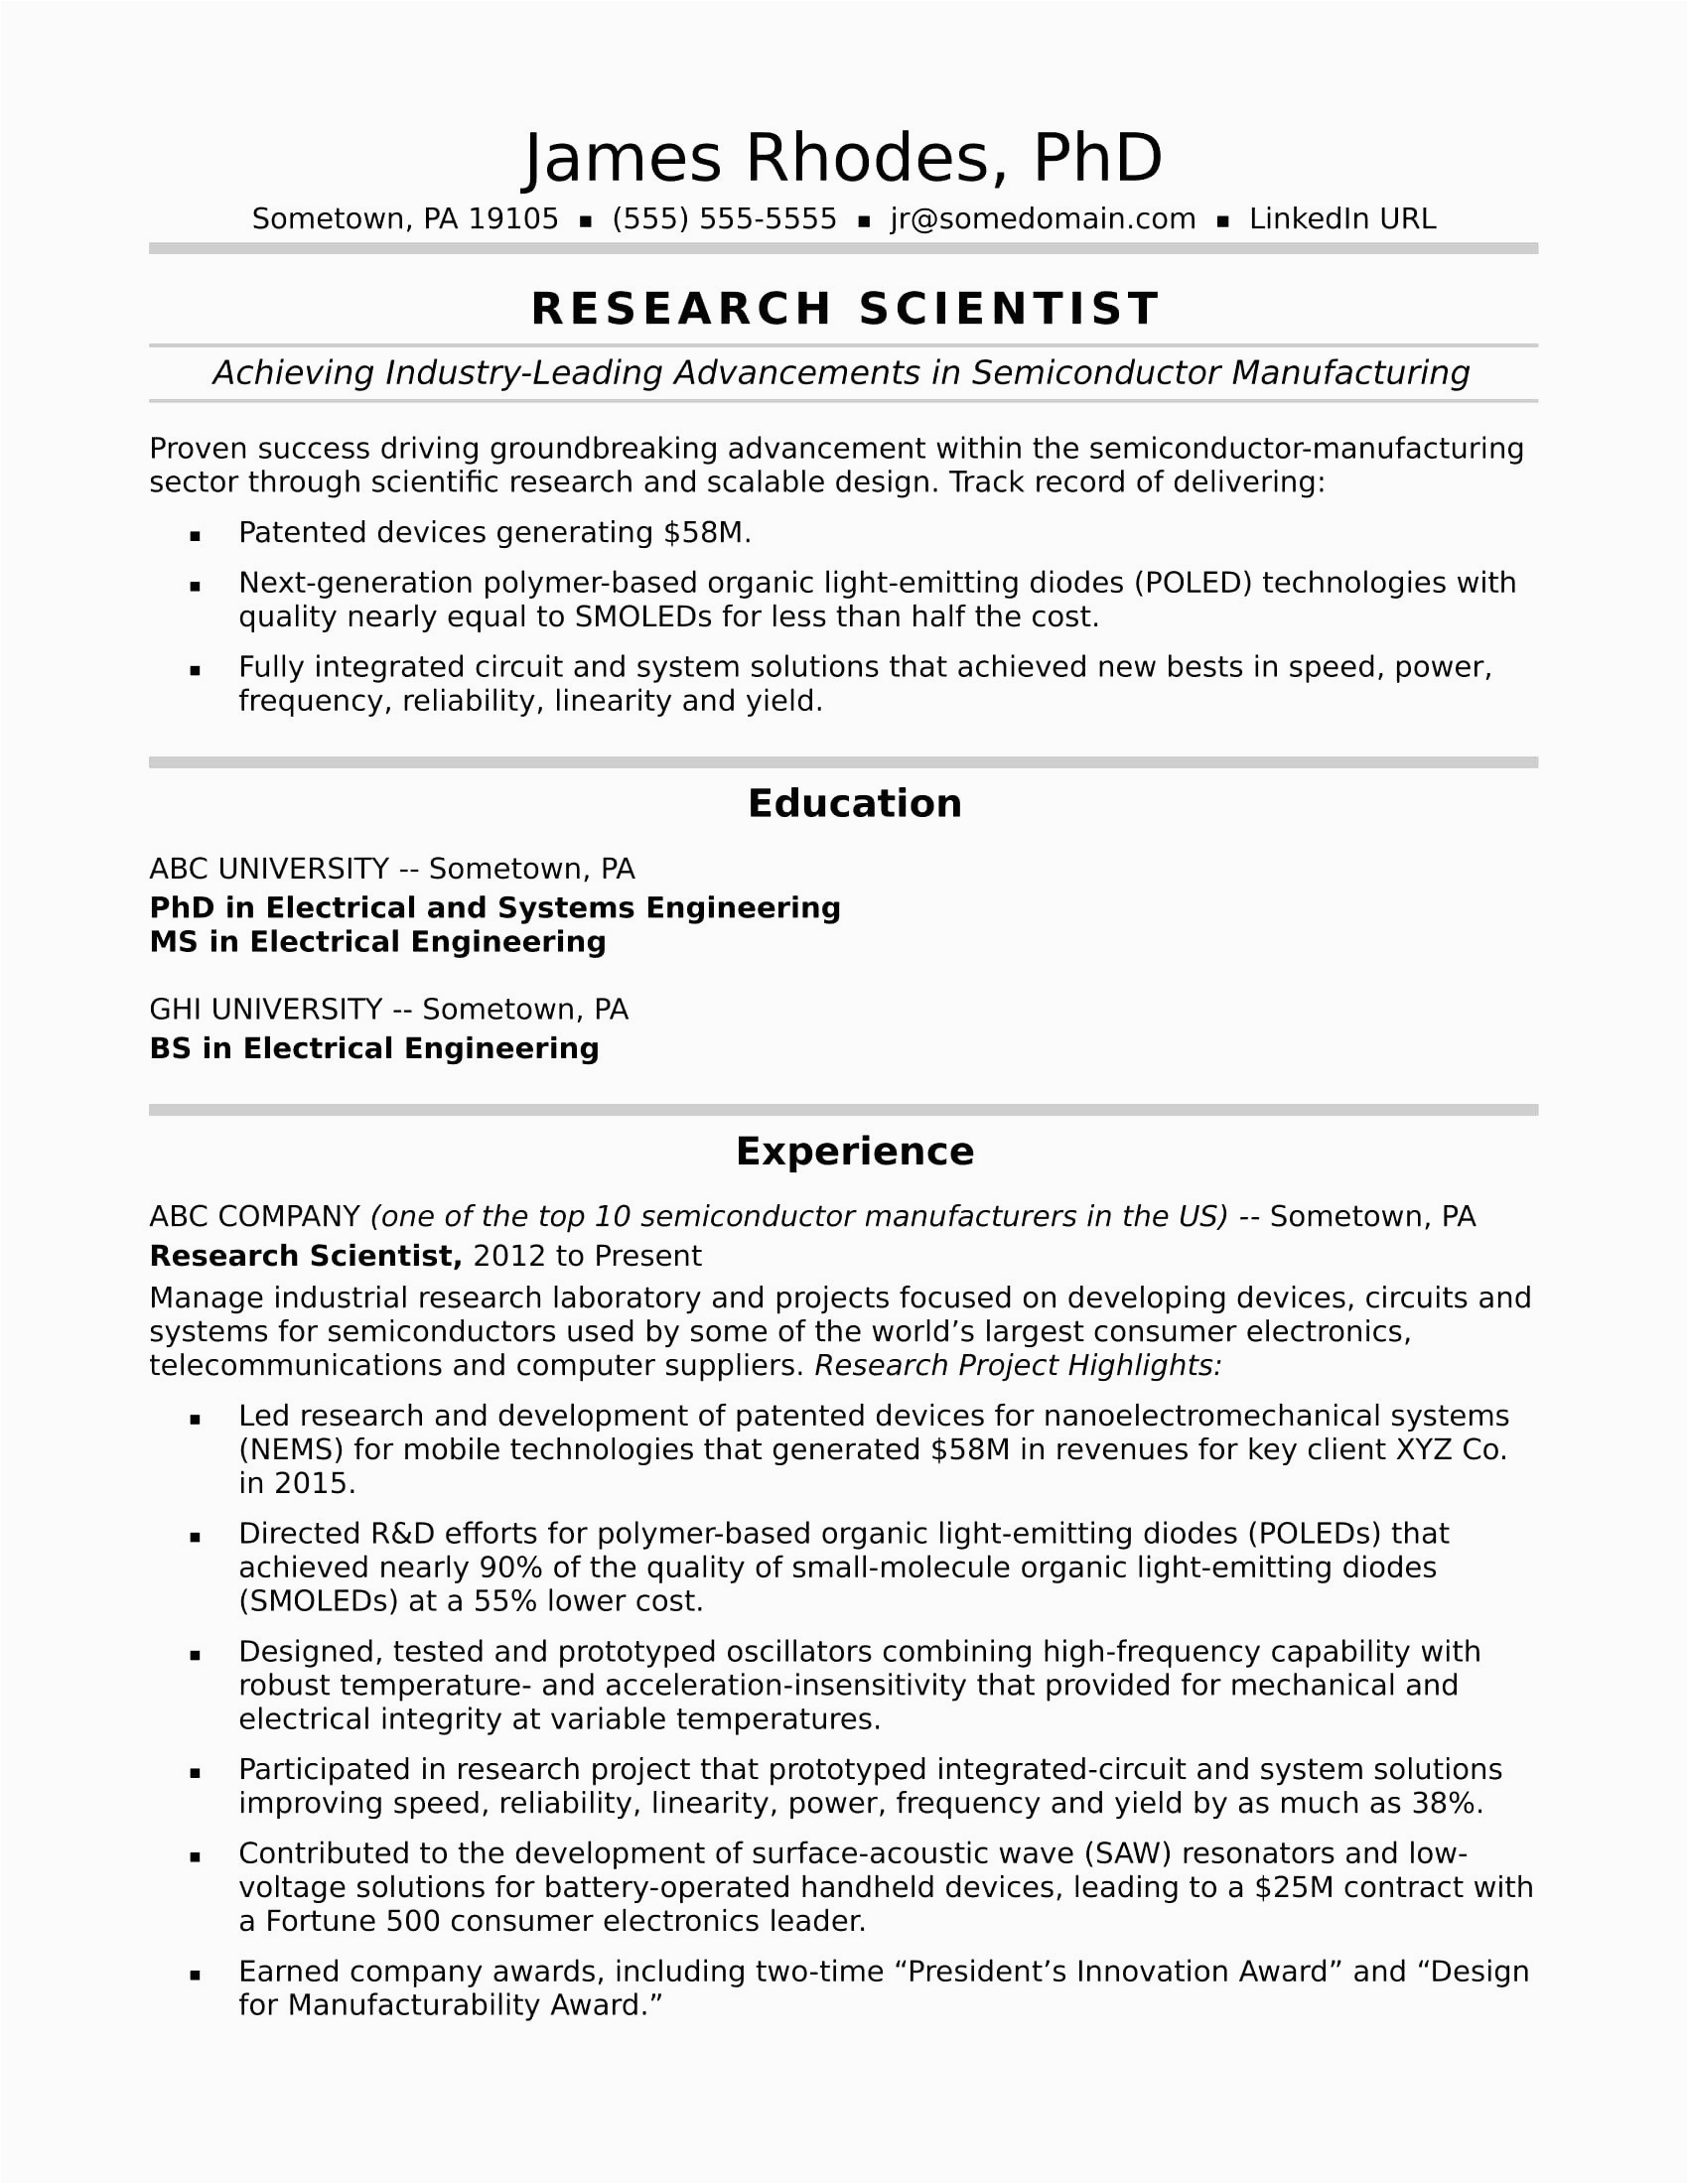 Data Science Resume Sample Entry Level Entry Level Data Scientist Resume